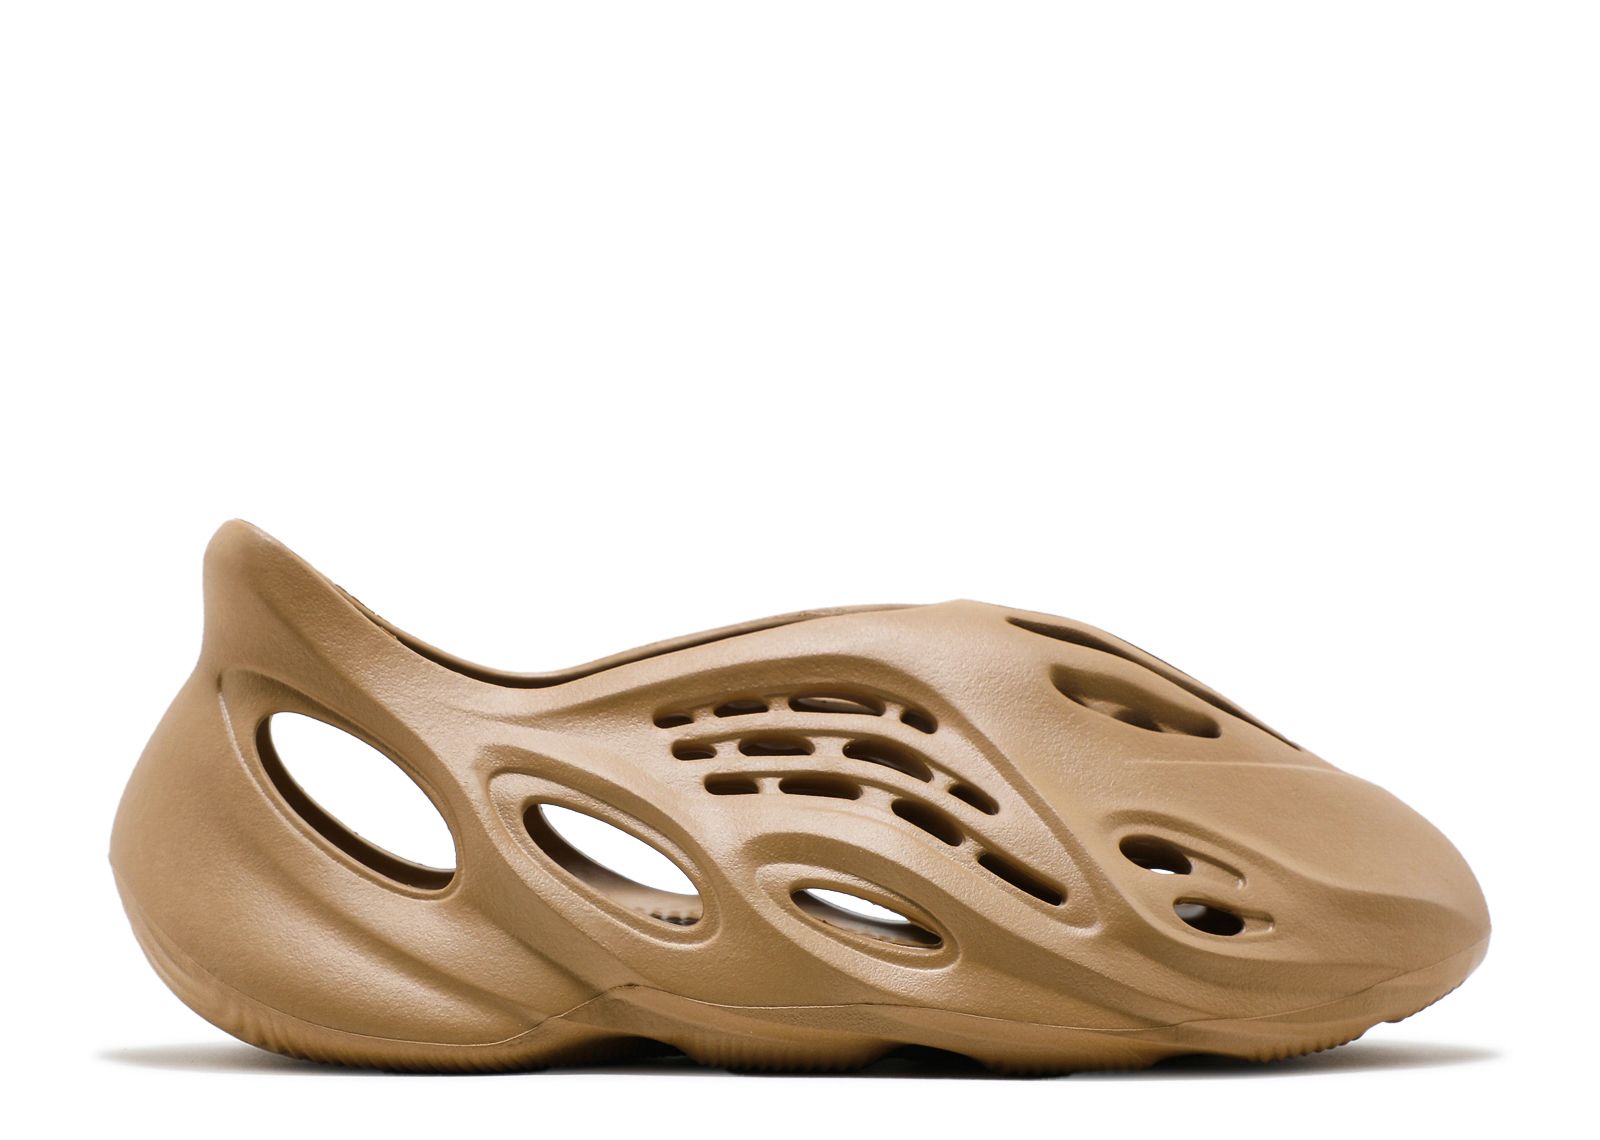 Yeezy Foam Runner 'Ochre' - Adidas - GW3354 - ochre/ochre/ochre ...